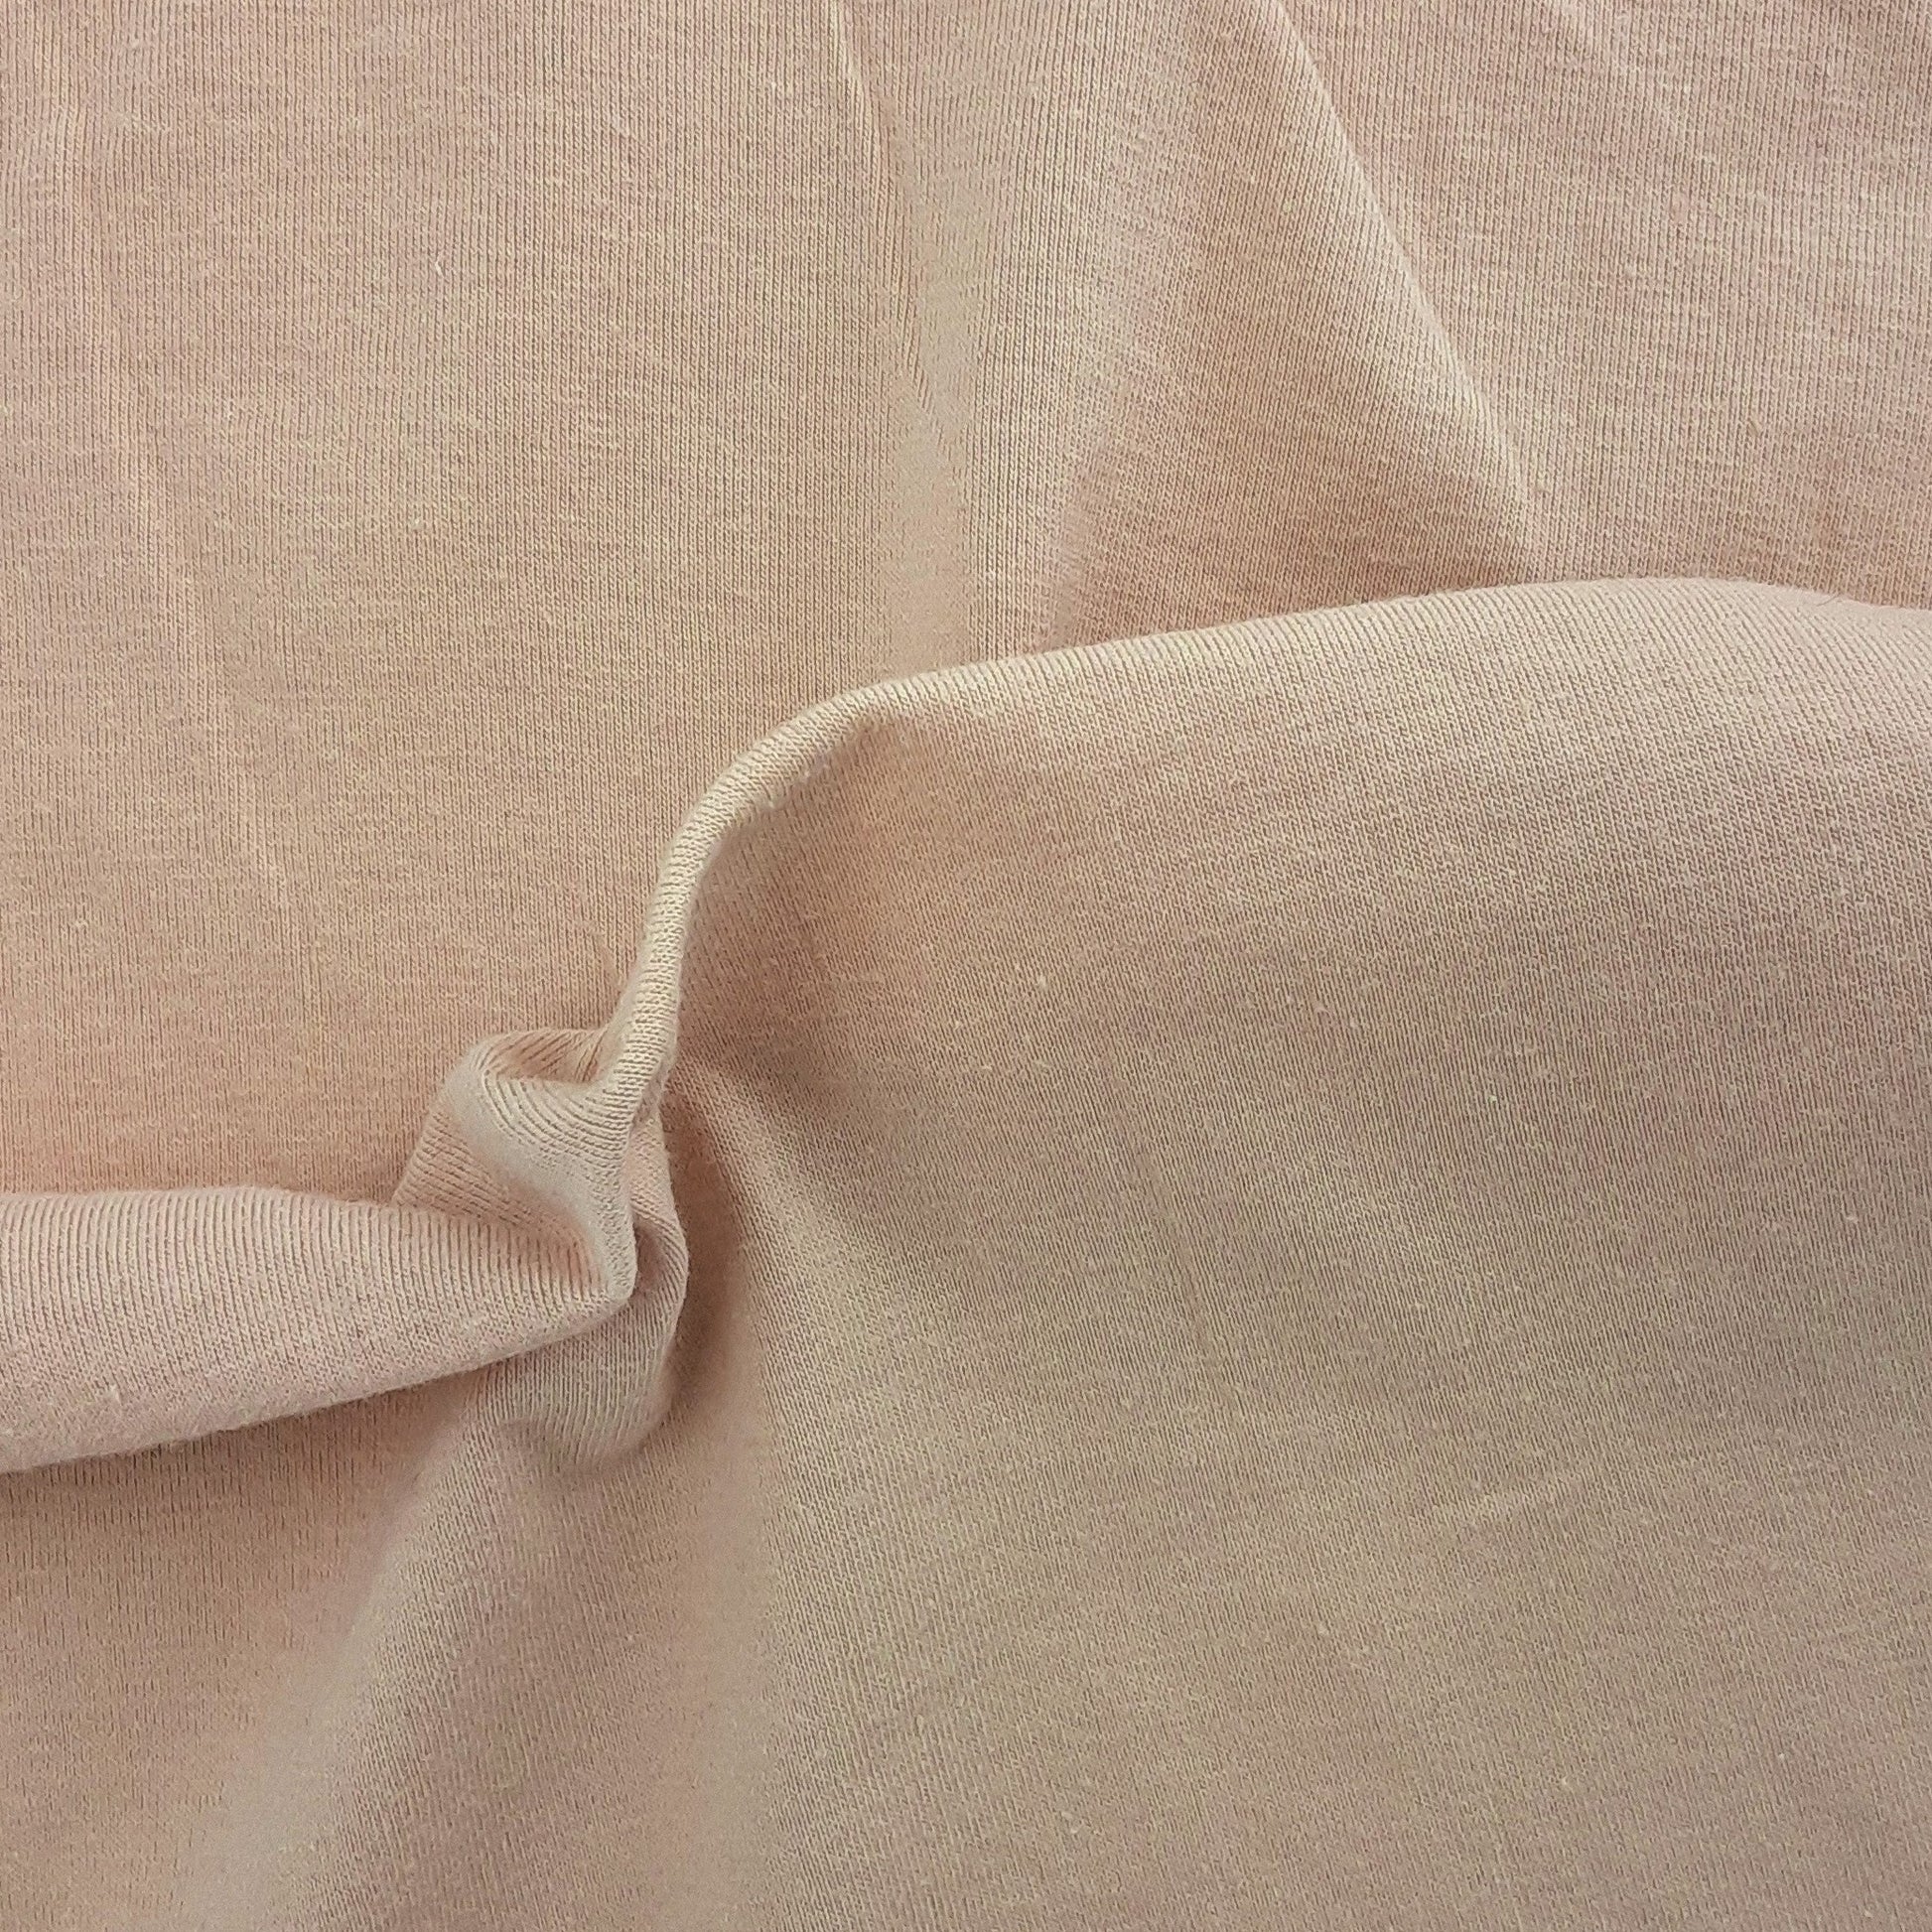 Nude #S49 Cotton Spandex Jersey 7 Ounce Knit Fabric - SKU 6840A